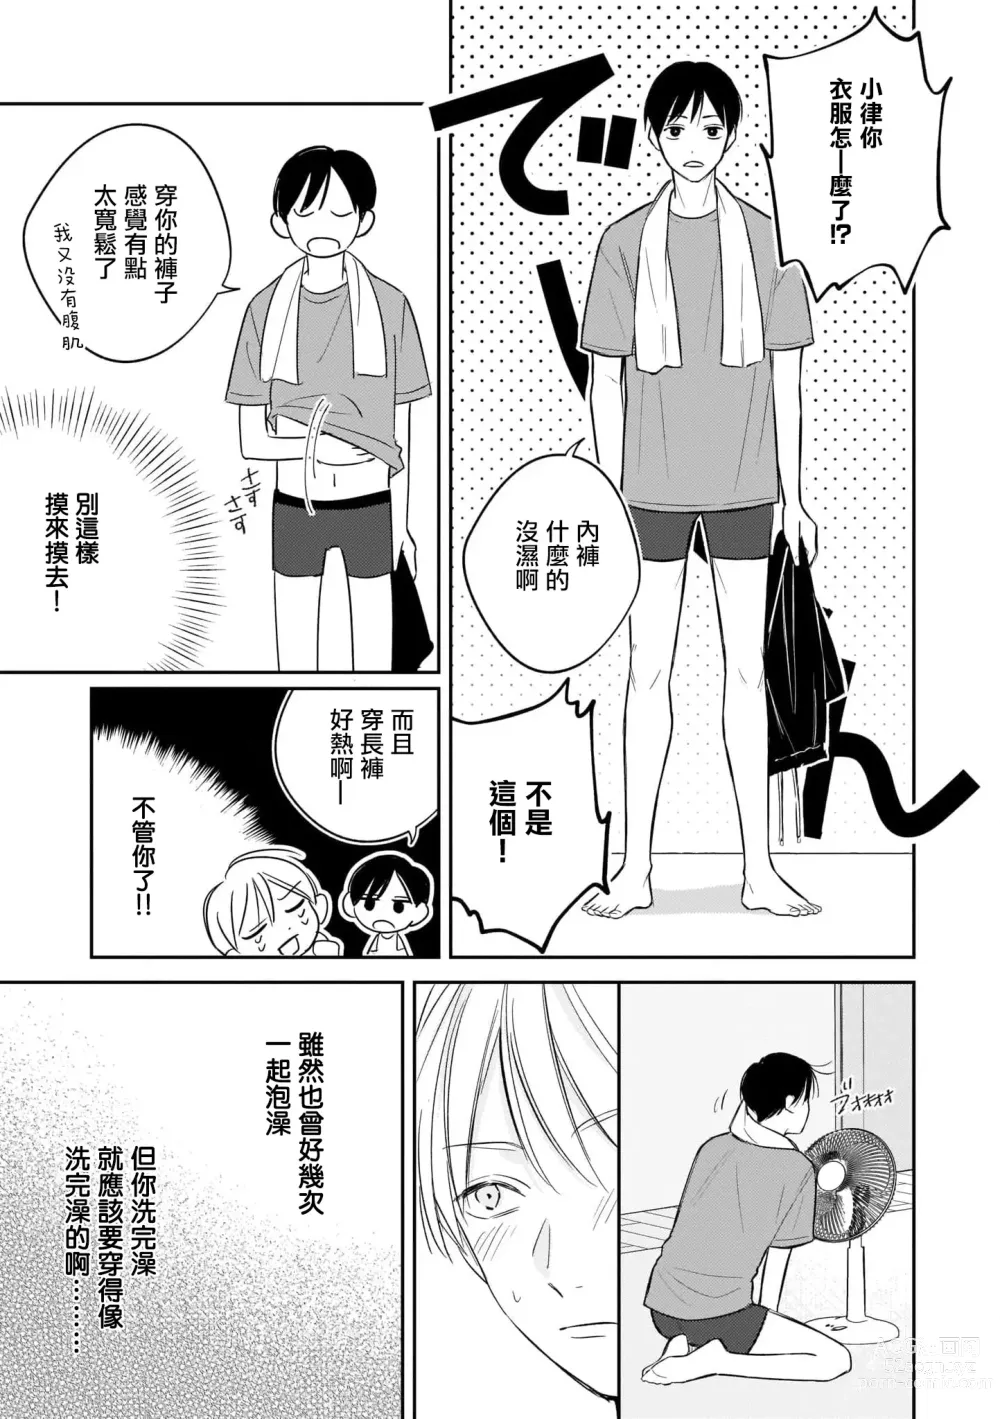 Page 18 of manga 无敌的baby blue #03